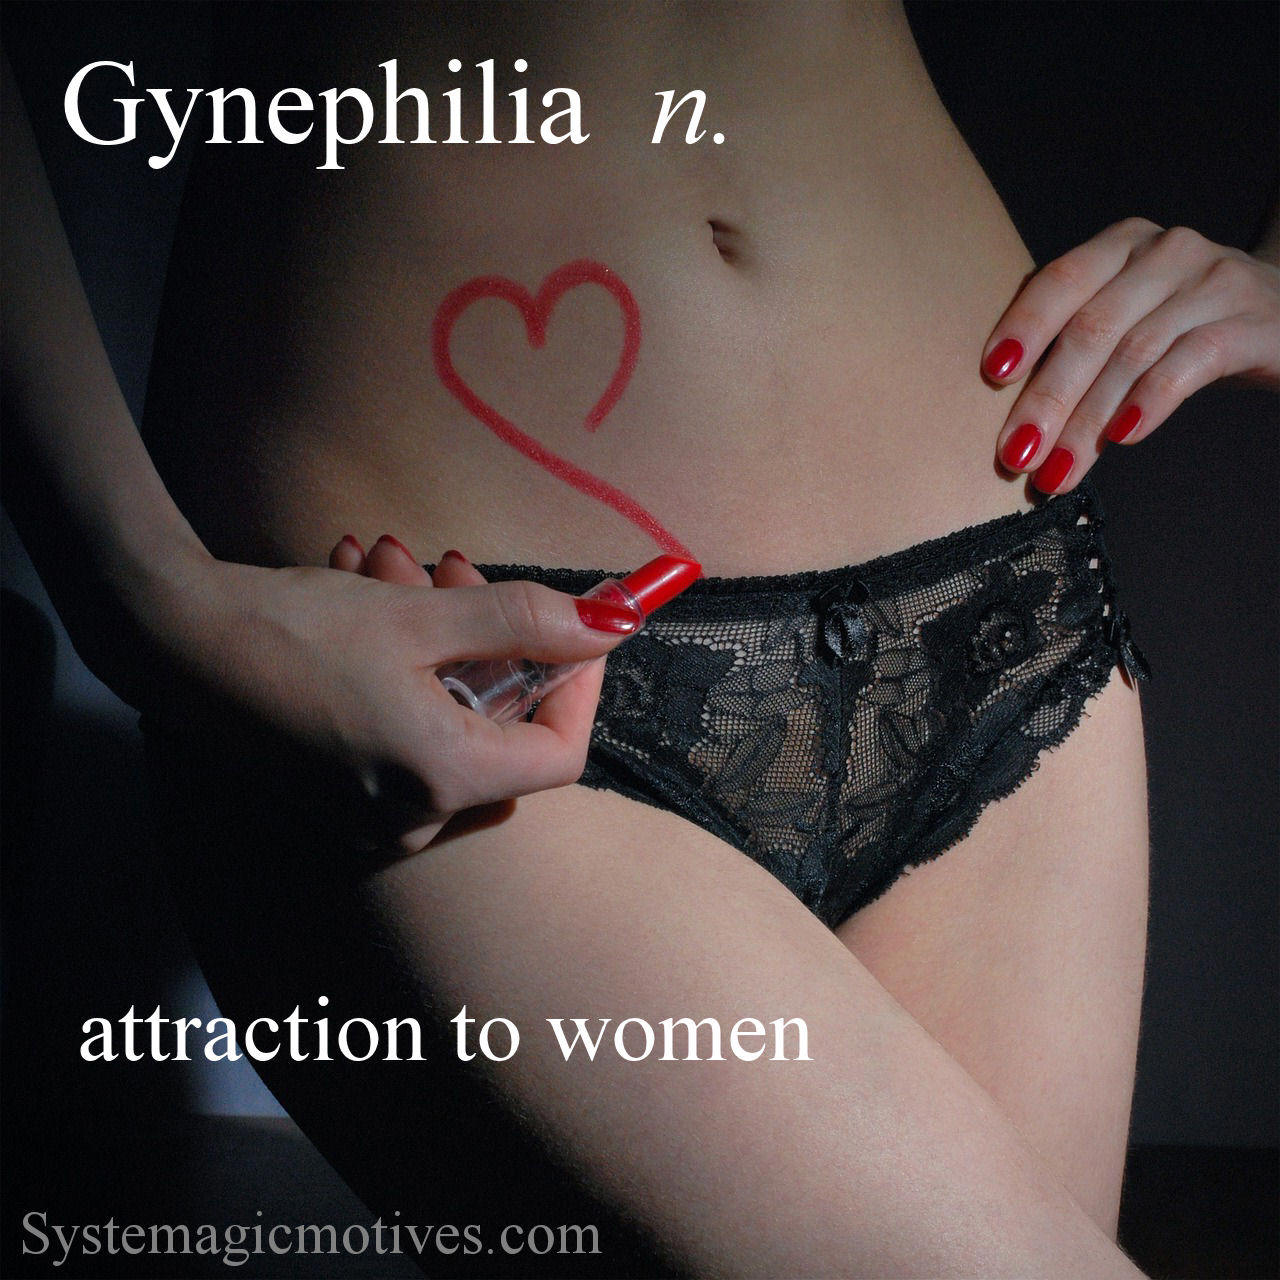 Graphic Definition of Gynephilia